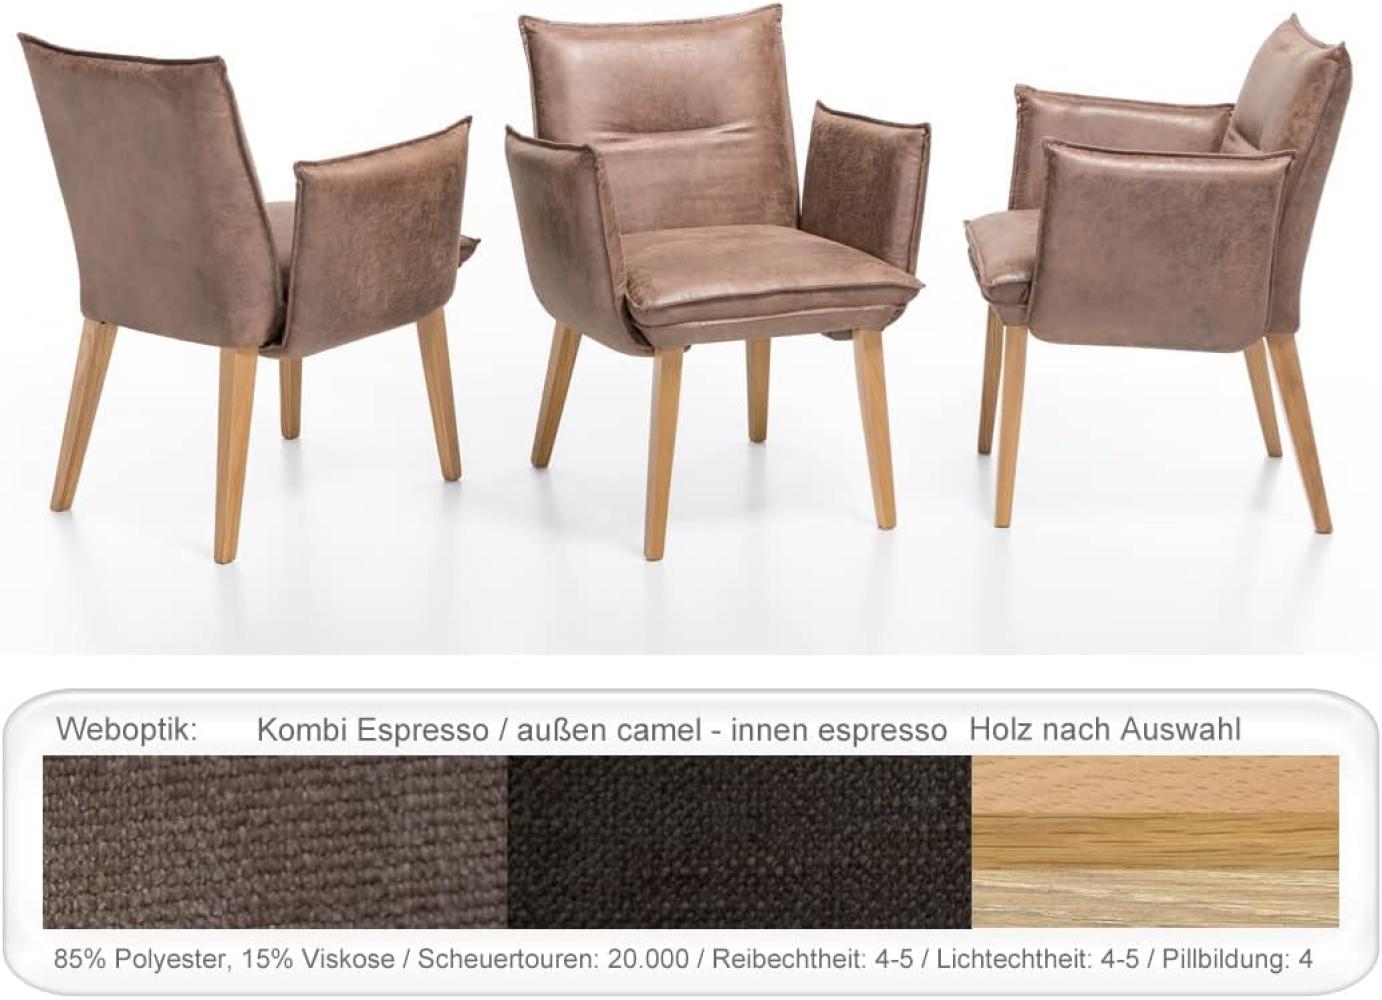 6x Sessel Gerit 2 Rücken mit Naht Polstersessel Esszimmer Massivholz Eiche natur lackiert, Kombi Fleckless Espresso Bild 1